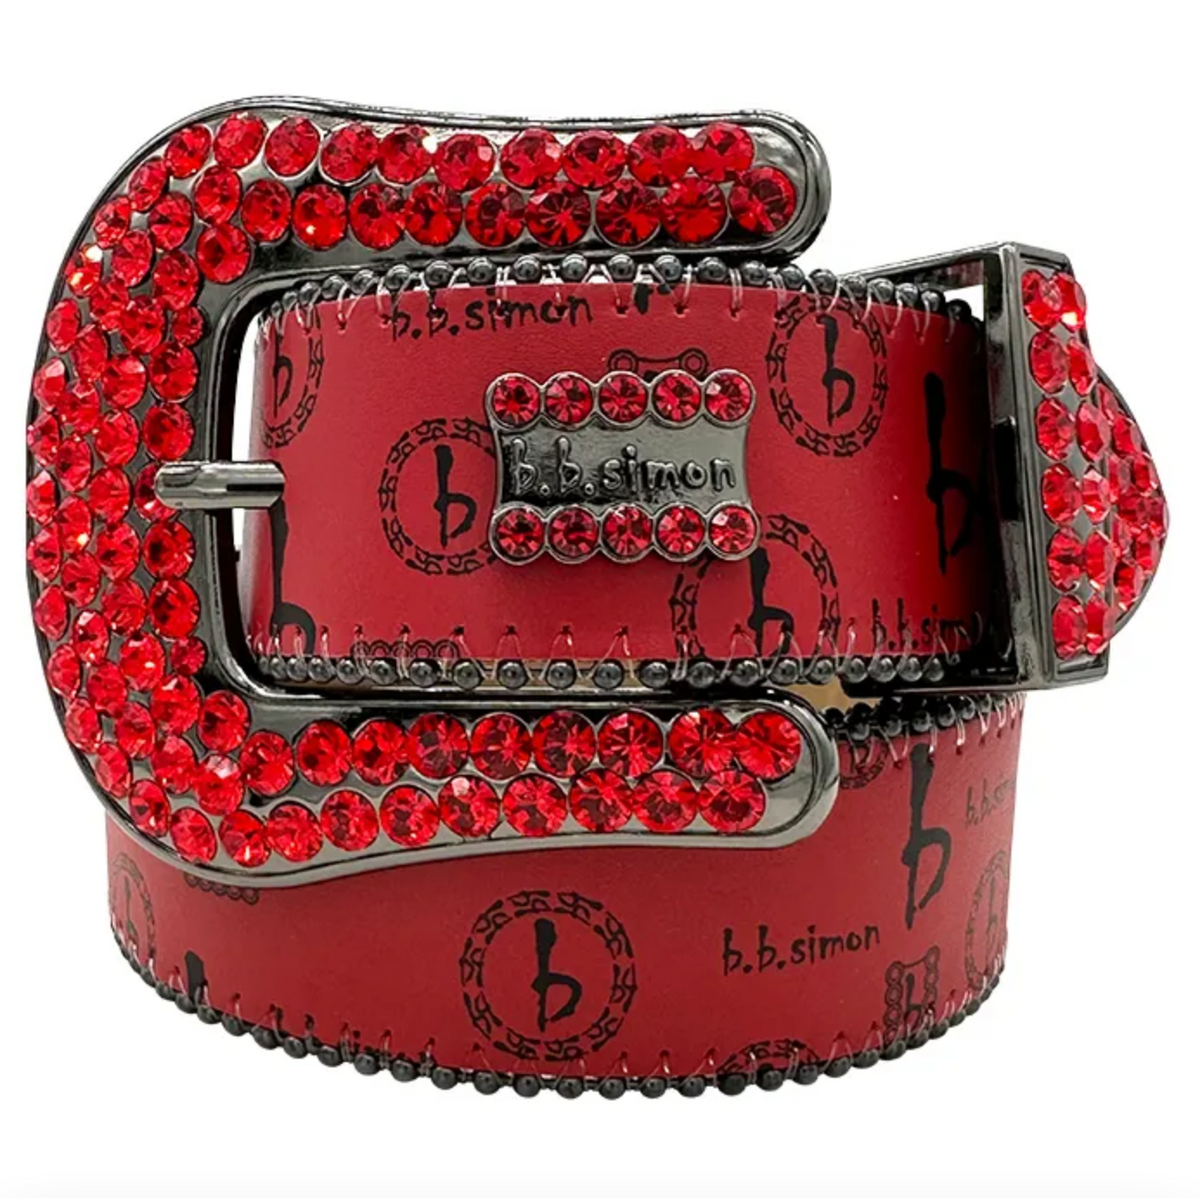 BB Simon Swarovski Crystal Red Leather Belt 34 XL New